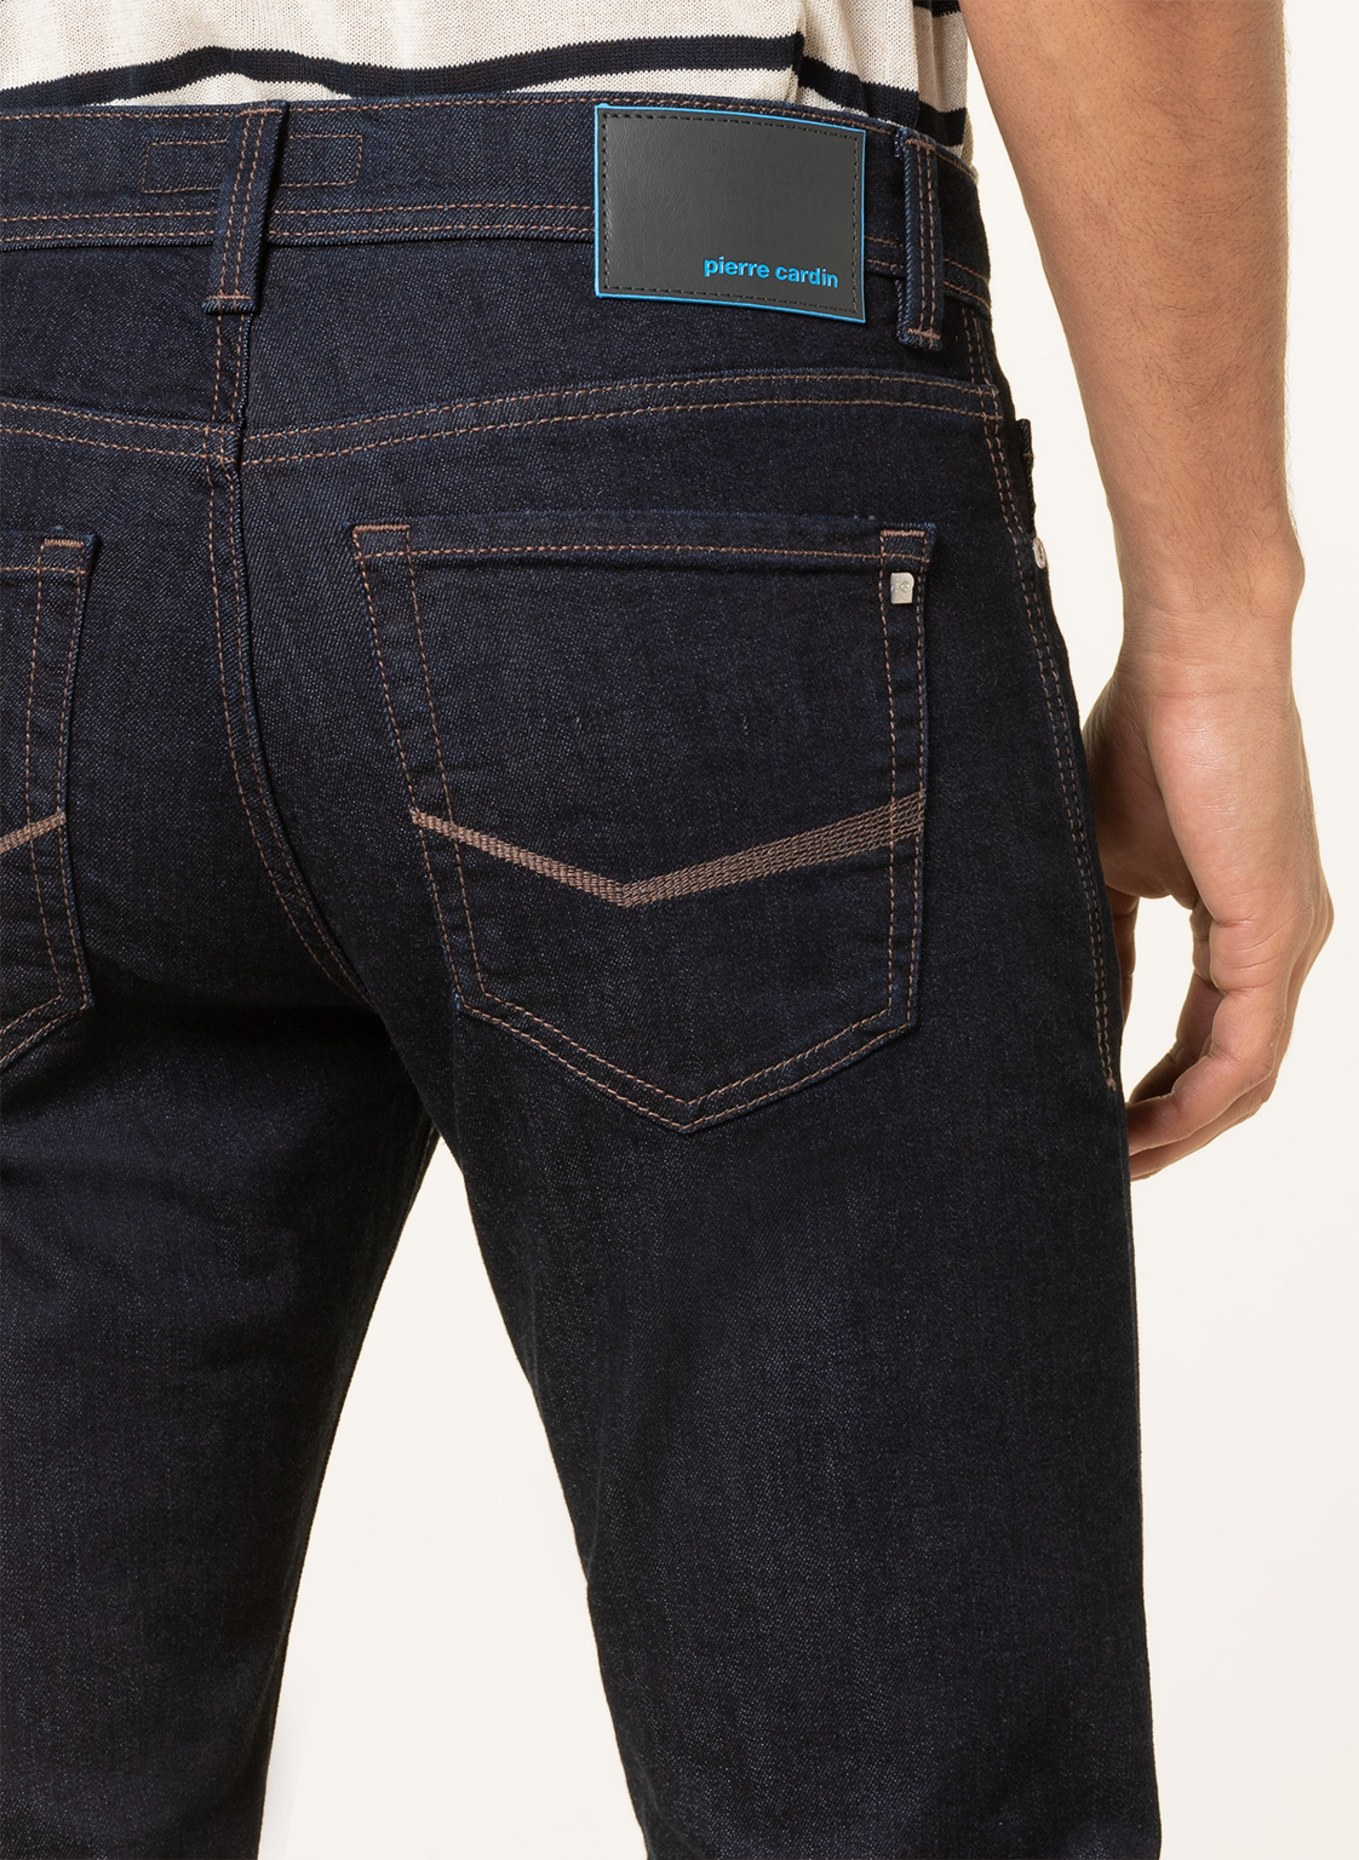 pierre cardin Jeans LYON FUTURE FLEX Tapered Fit, Farbe: 6801 blue/black stonewash (Bild 5)